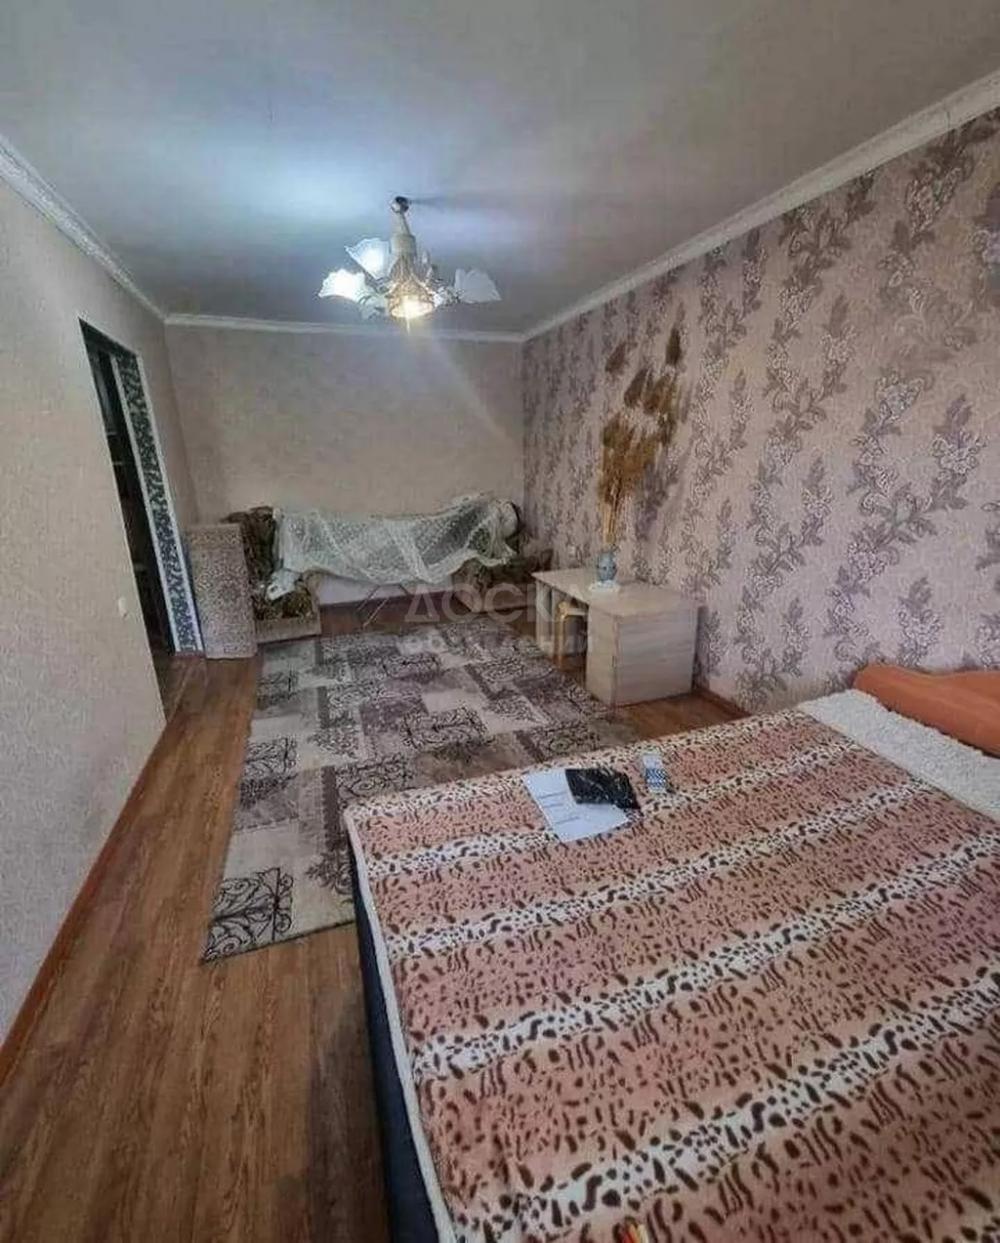 Сдаю 1-комнатную квартиру, 37кв. м., этаж - 4/5, район Бишкек Парк.